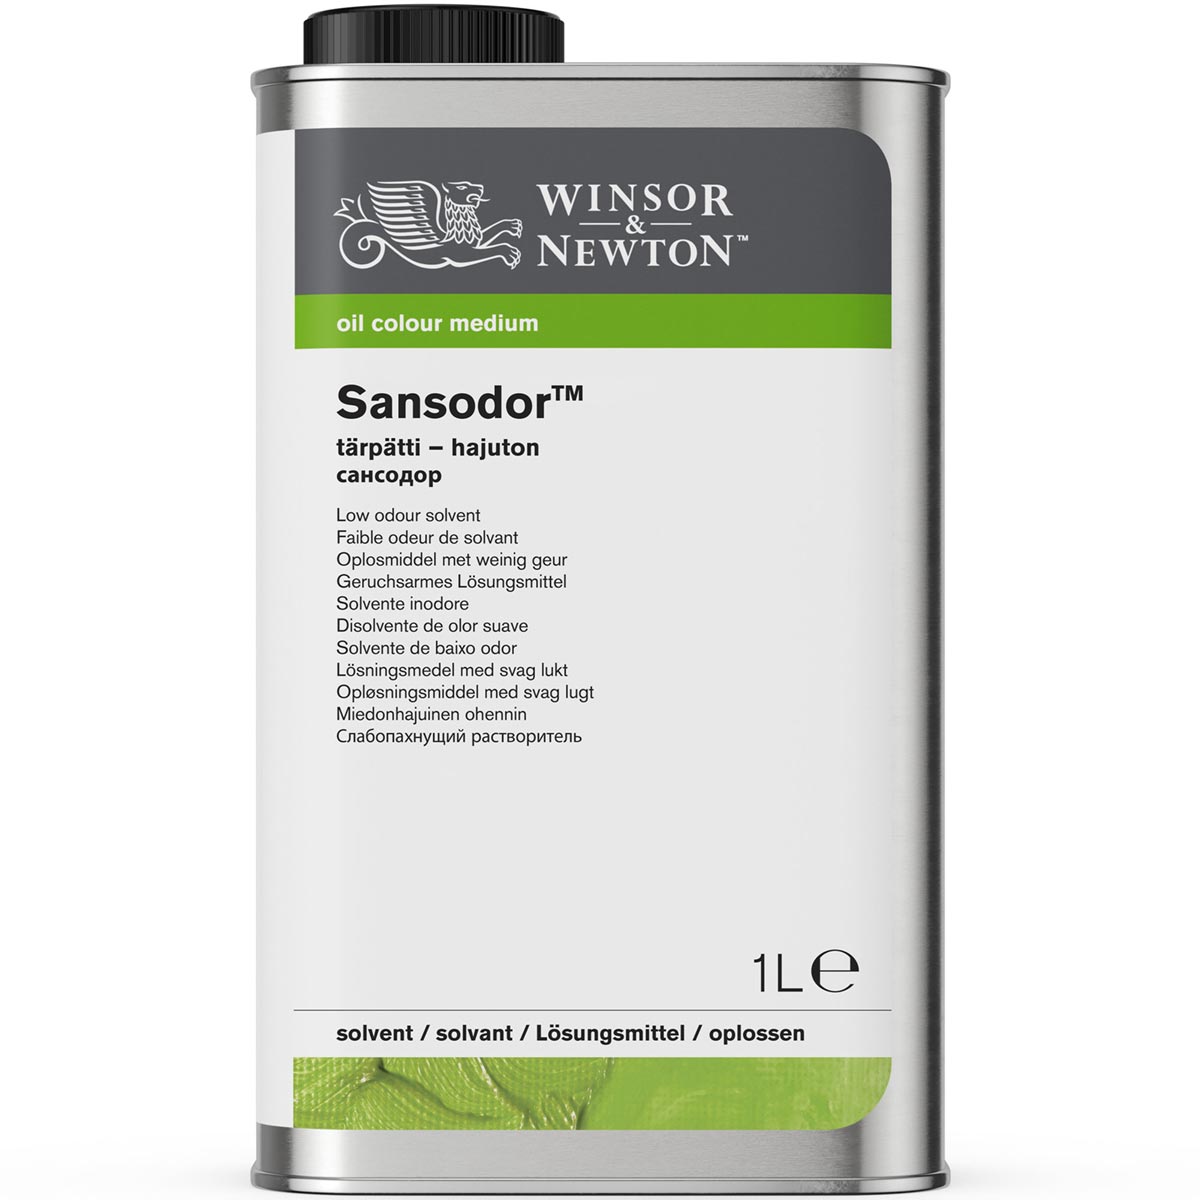 Winsor en Newton - Sansodor Low Odor Solvent Cleaner - 1 liter